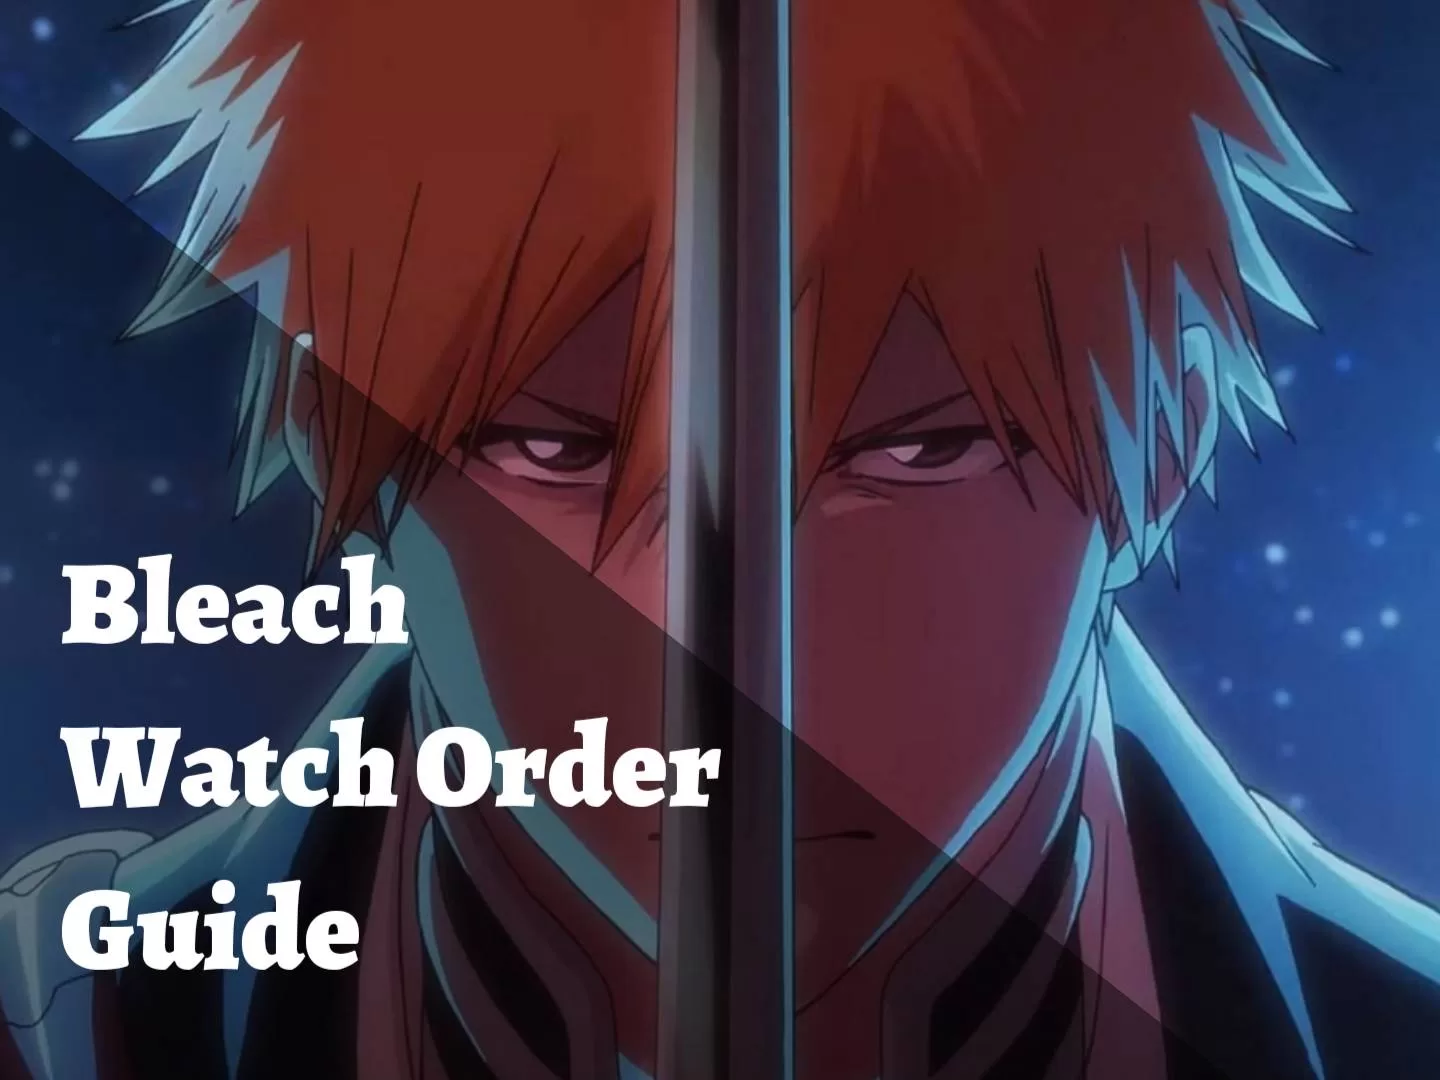 Bleach Watch Order Guide